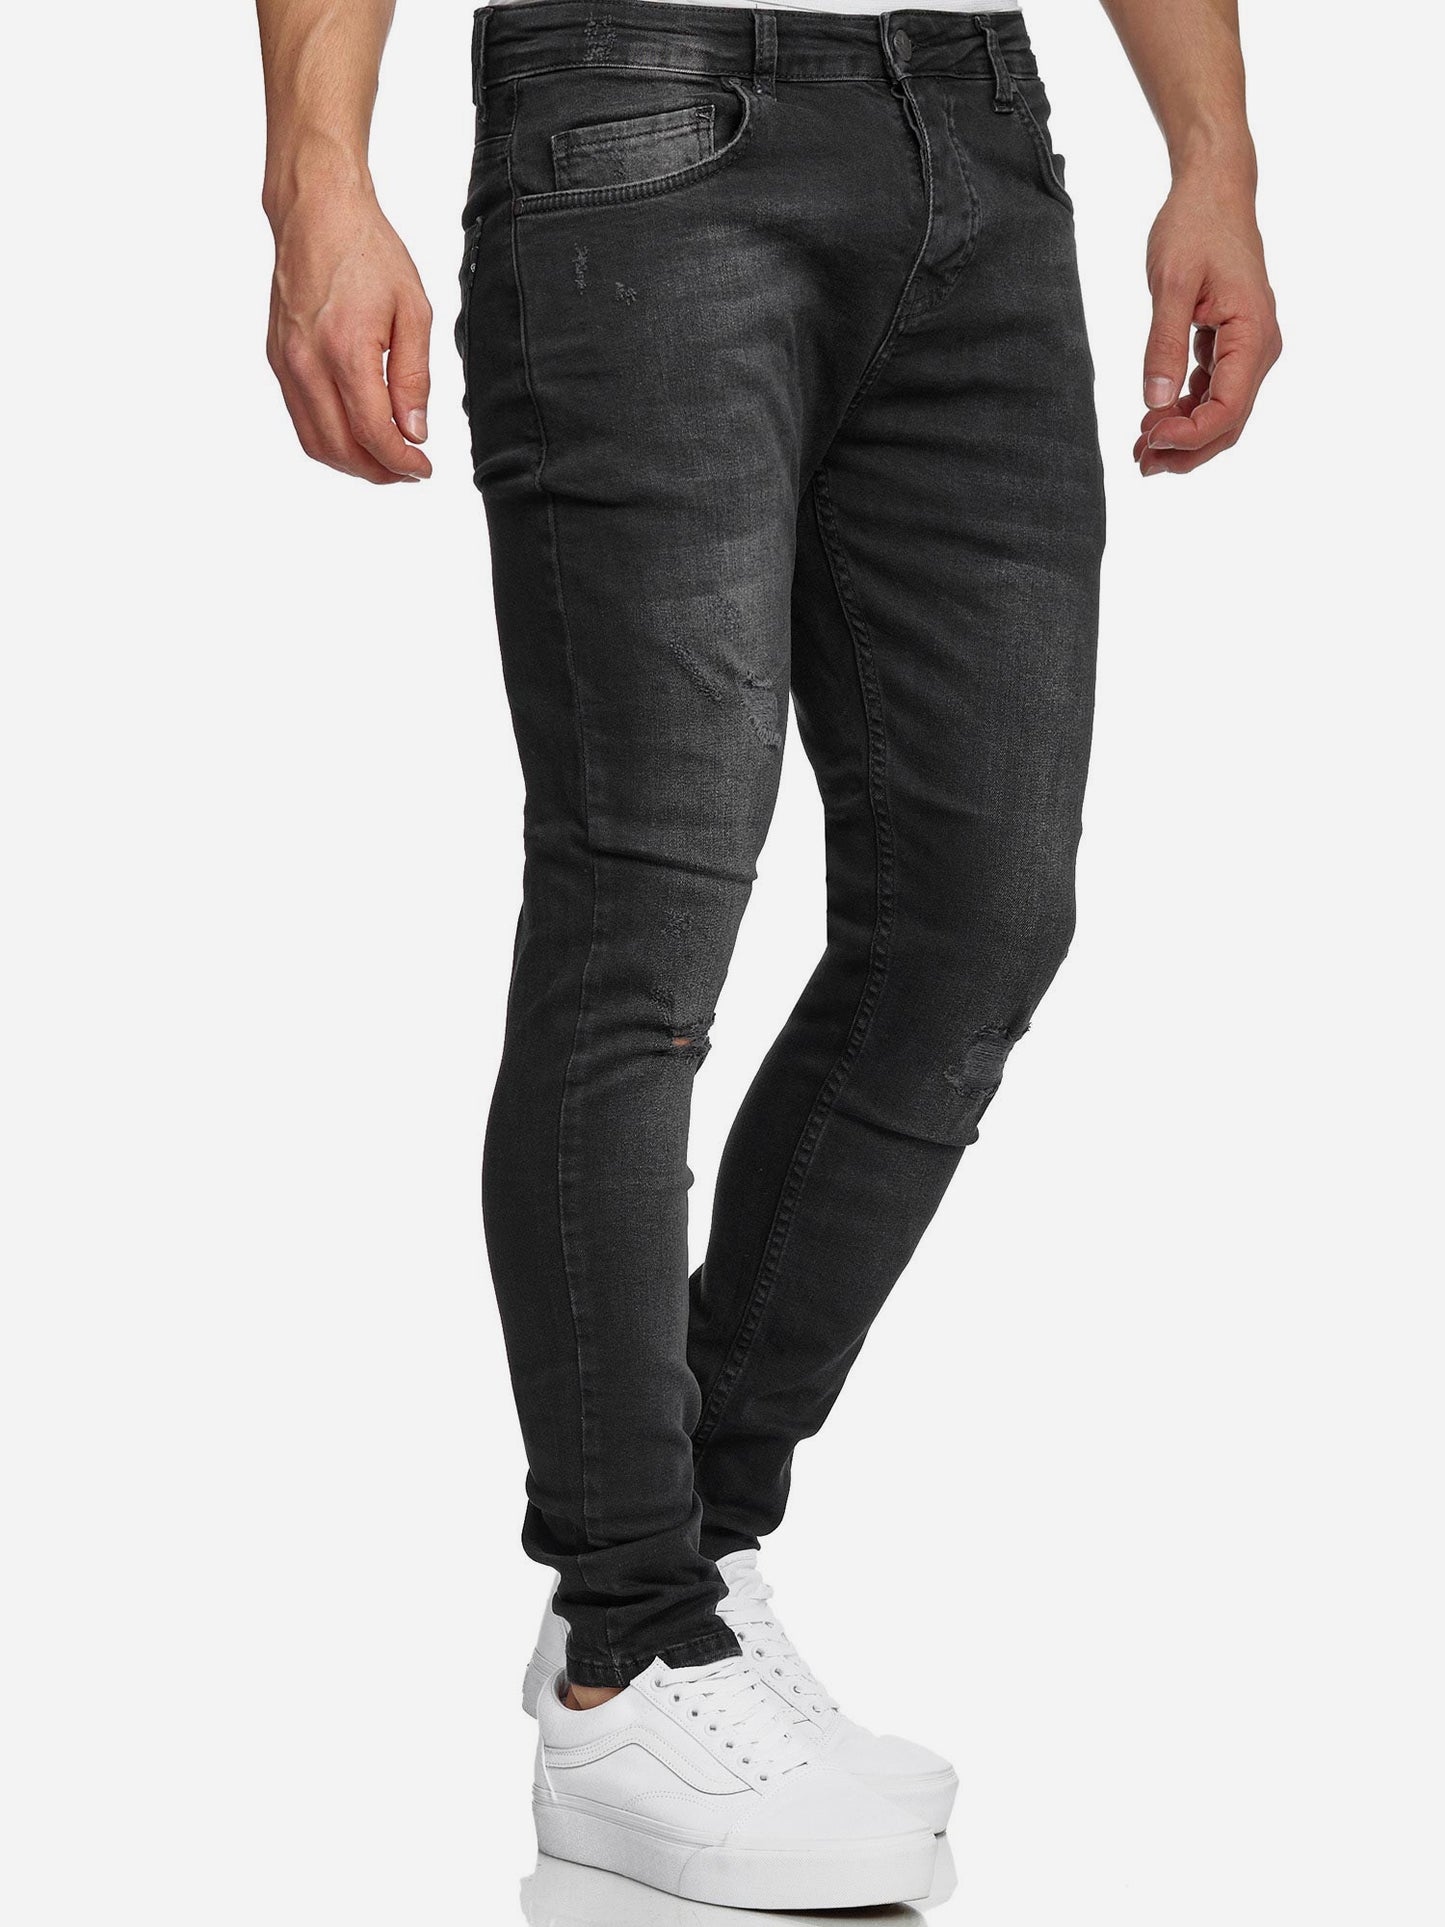 Tazzio Herren Jeans Skinny Fit 17514